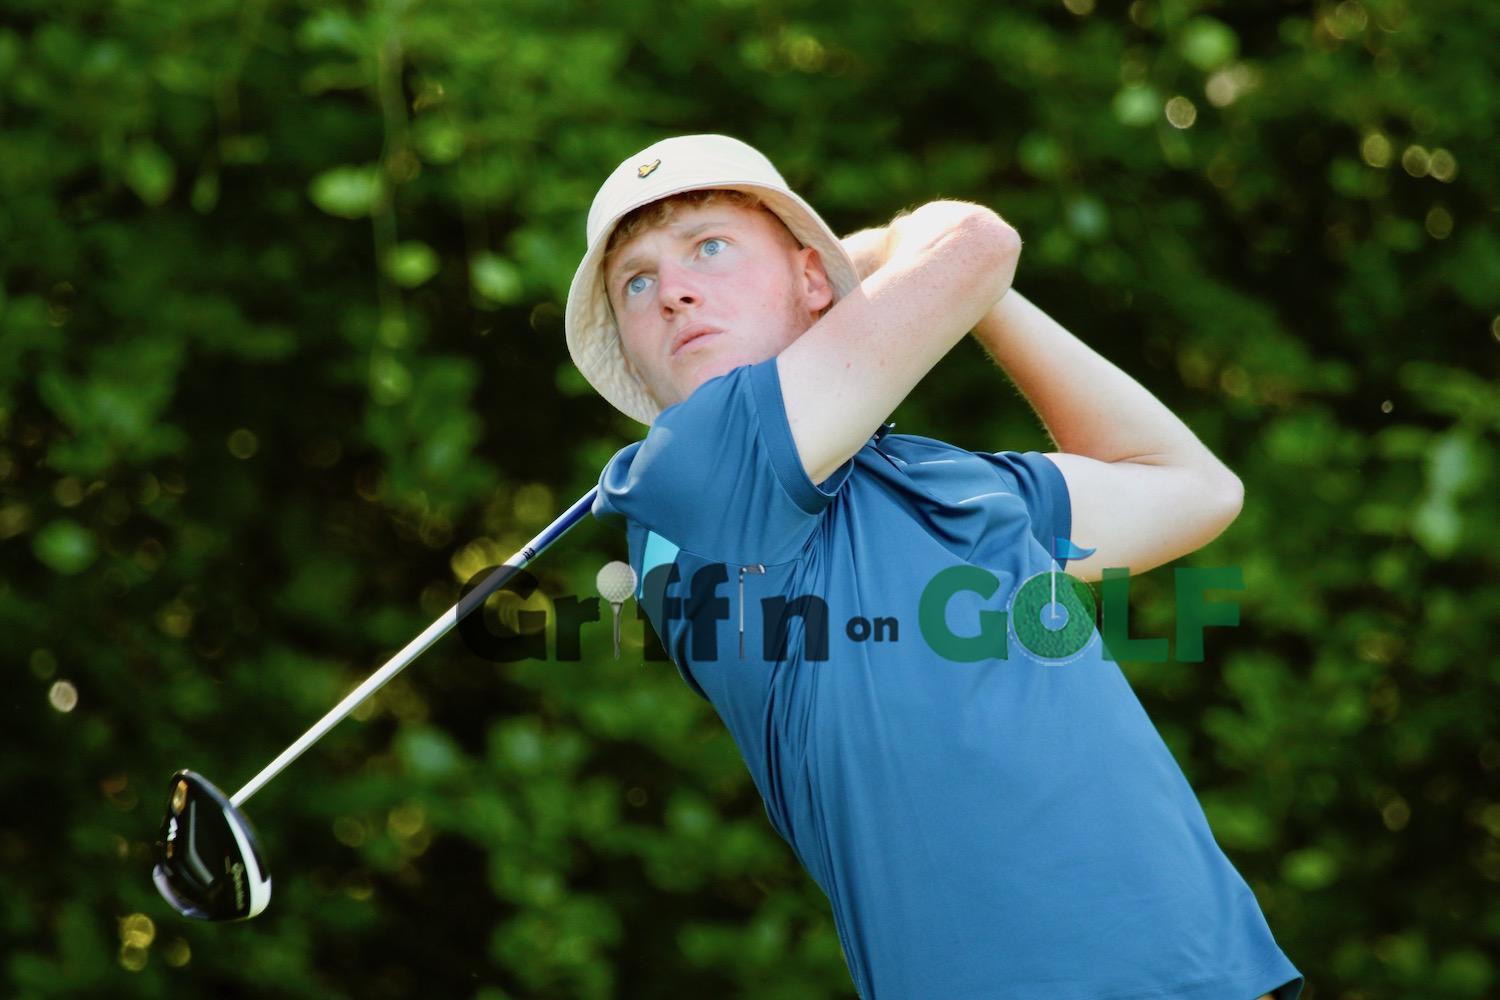 James Freeman of Stoneham Golf Club